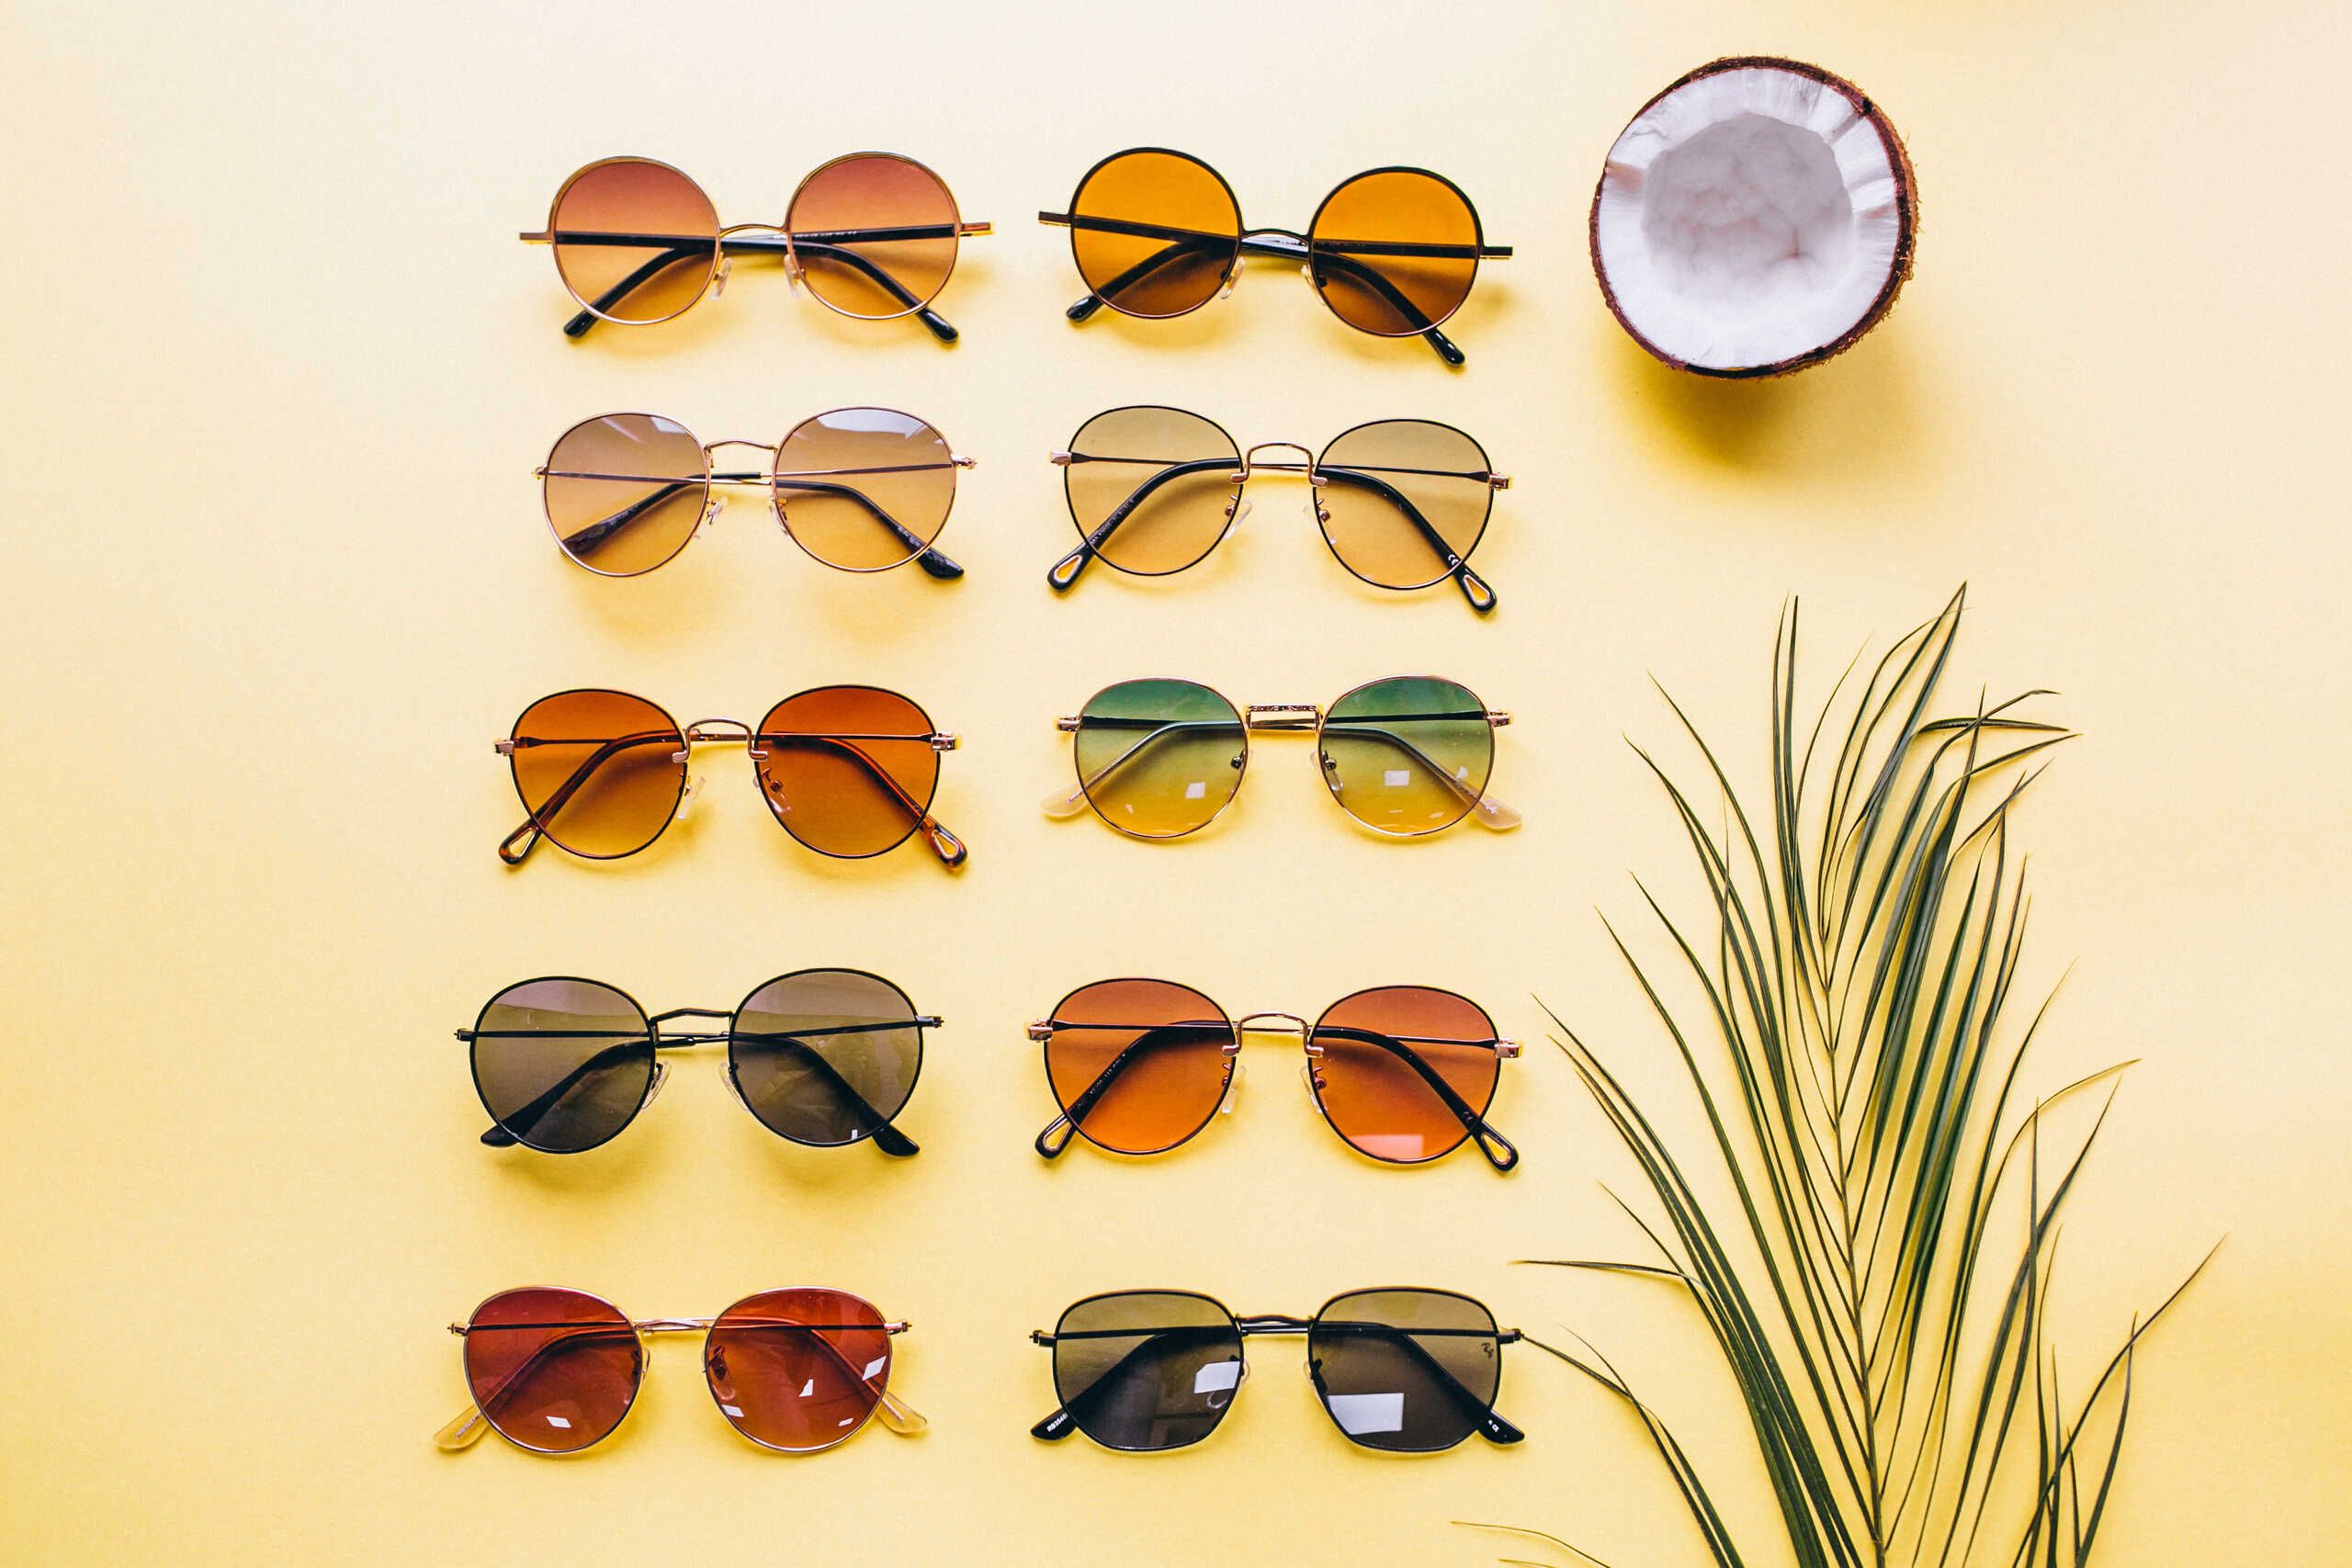 set-sunglasses-yellow-background-isolated.jpg